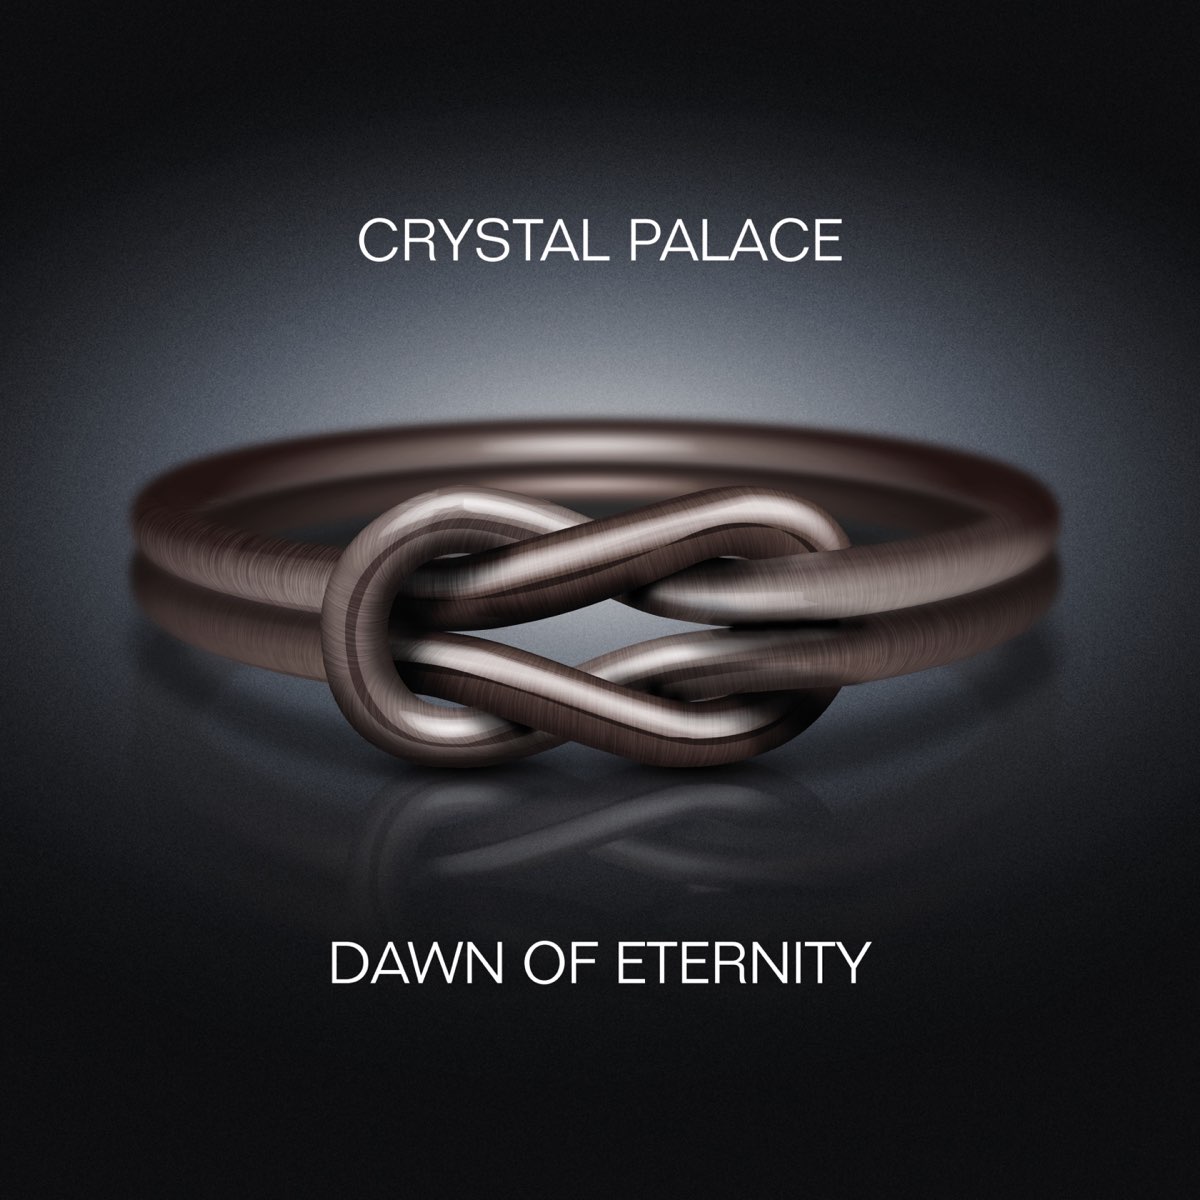 Обложка альбома Eternity. Crystal Palace альбом. Eternity как выглядит. Dawn of Eternity.